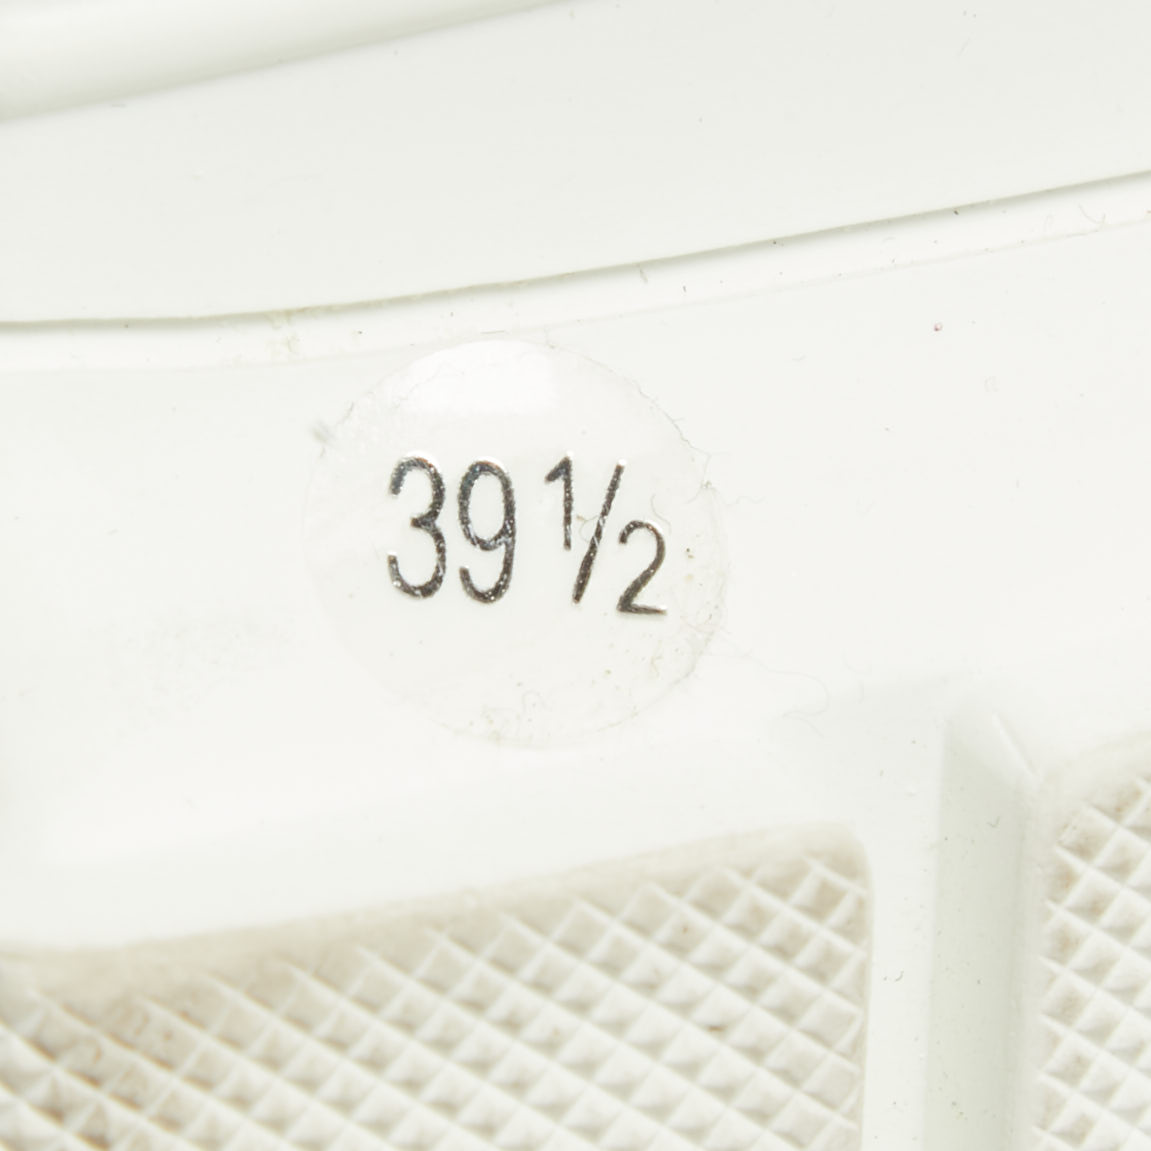 Gucci White/Cream Canvas Leather Flashtrek Sneakers Size 39.5